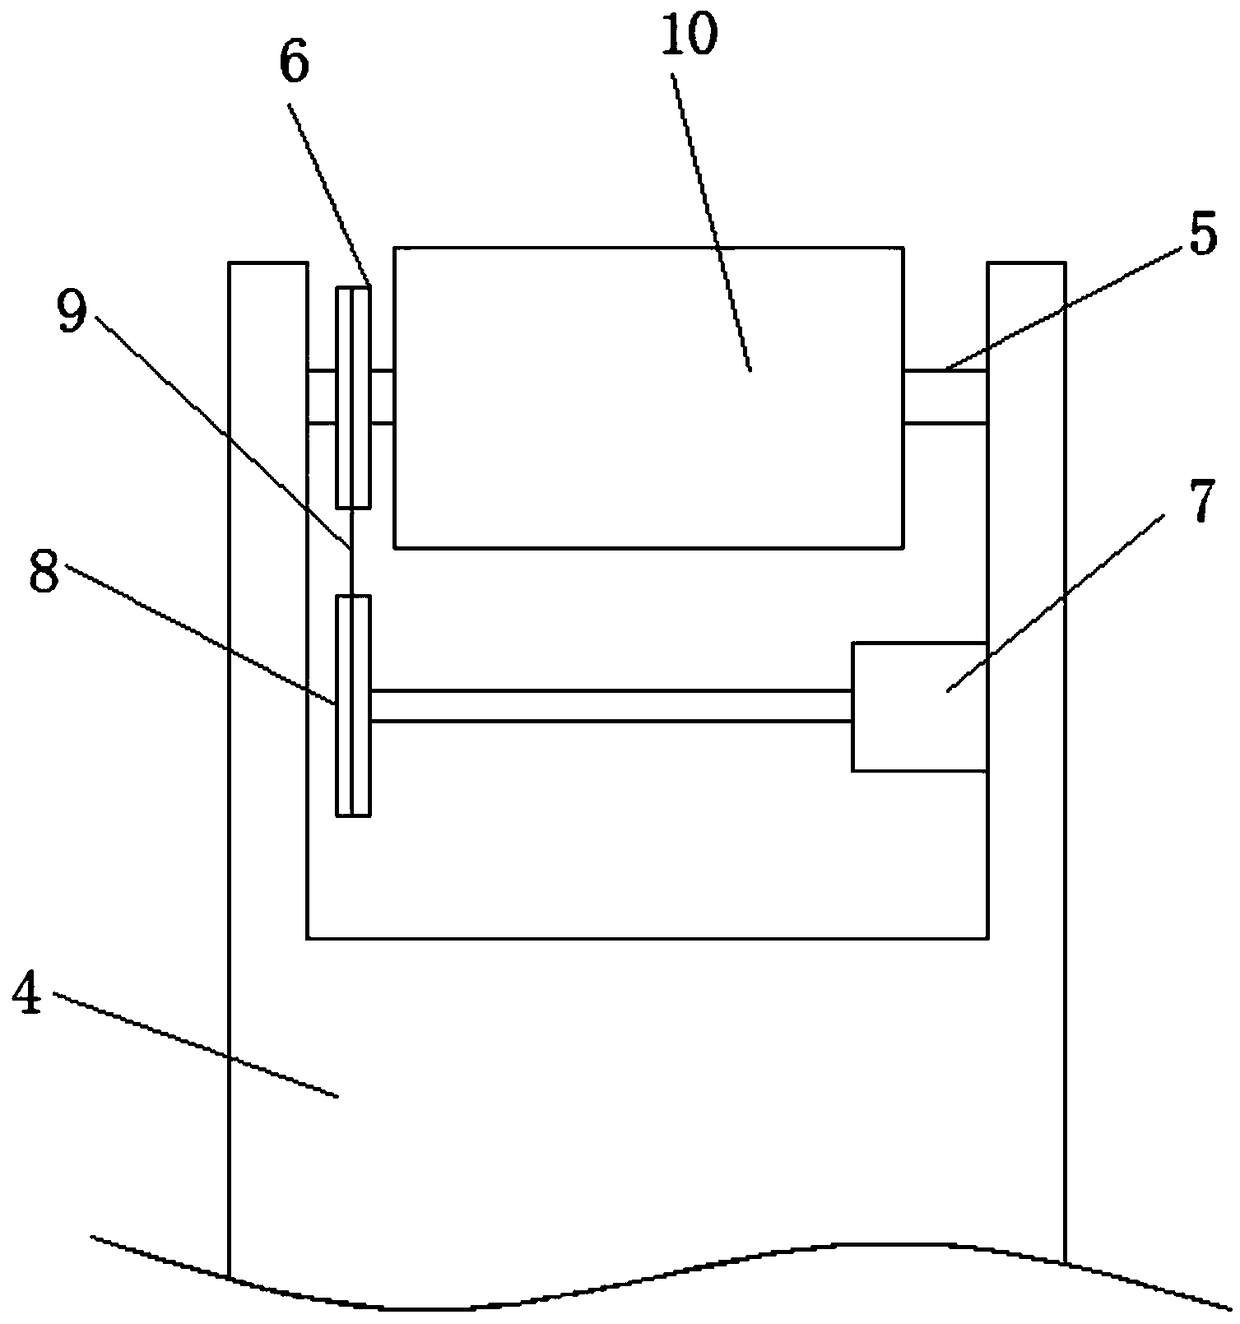 Regulating mechanism for positioning manipulator